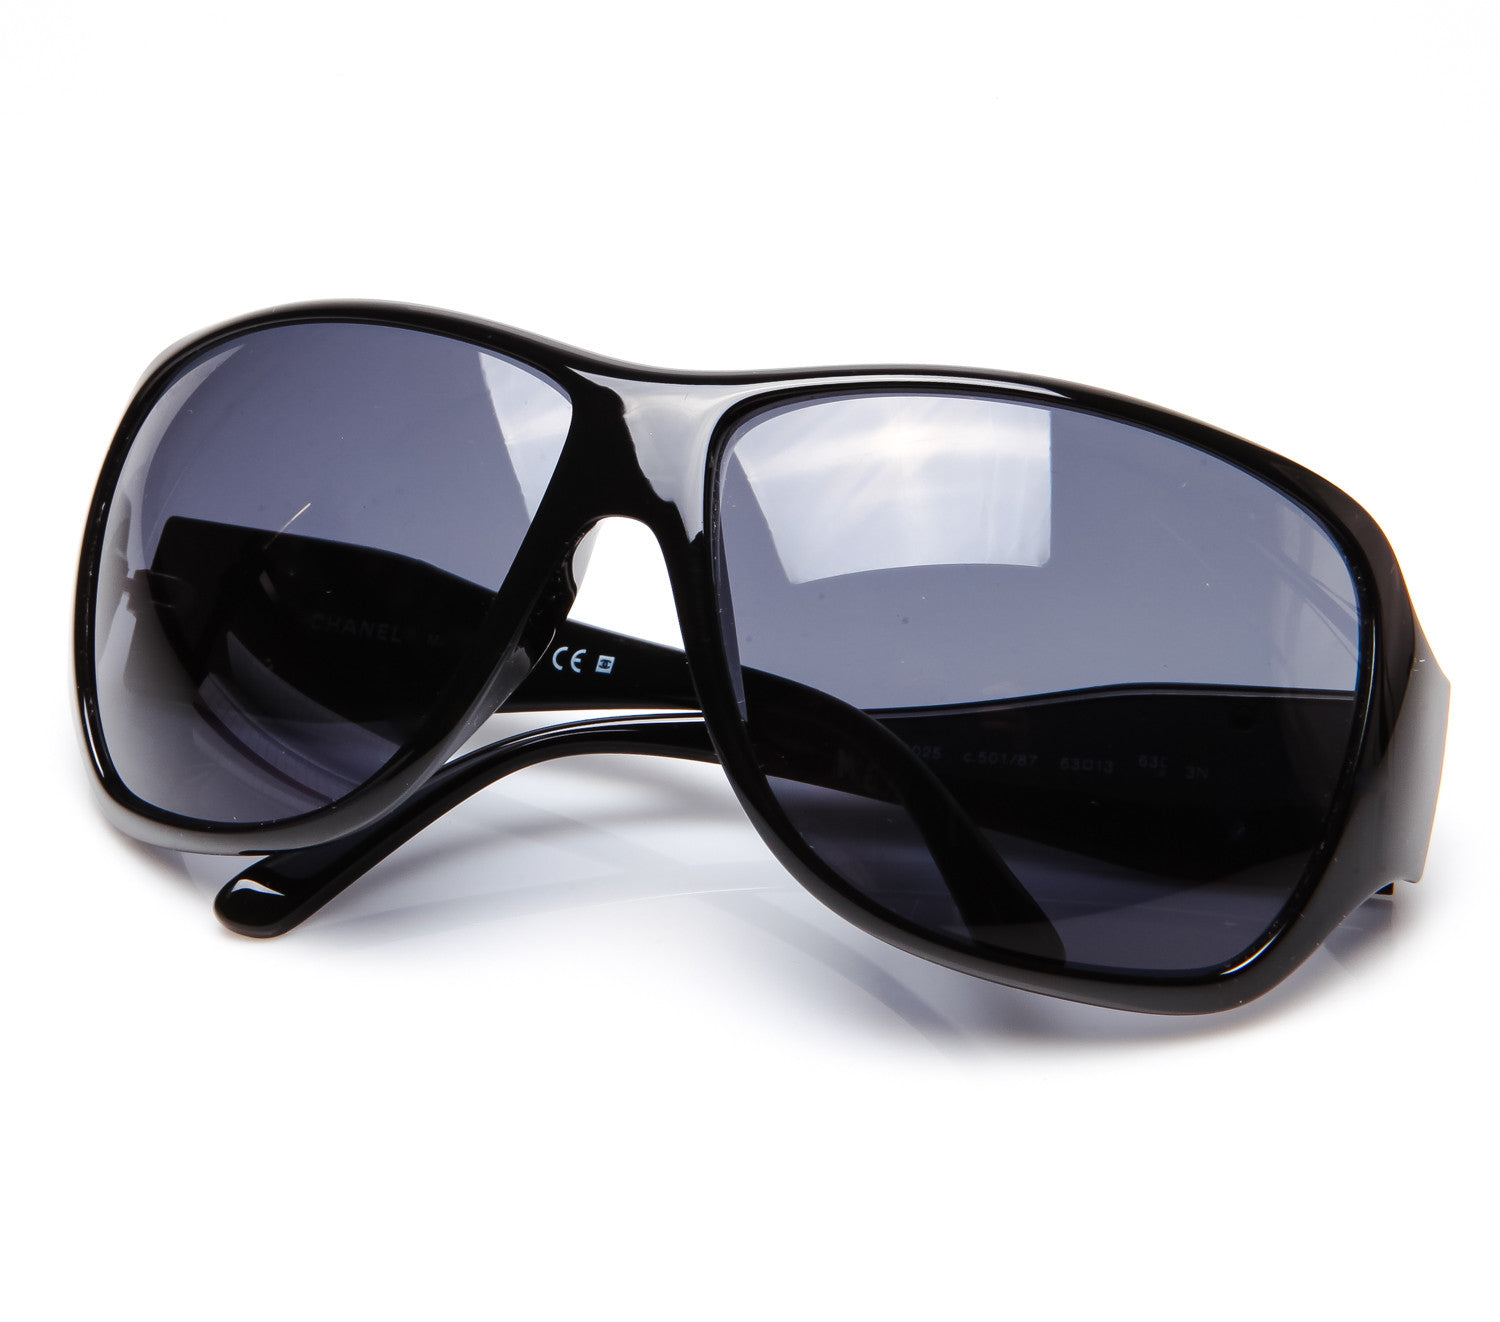 Chanel Chanel Oversized Black Ribbon Bow & CC Logo Sunglasses + Case